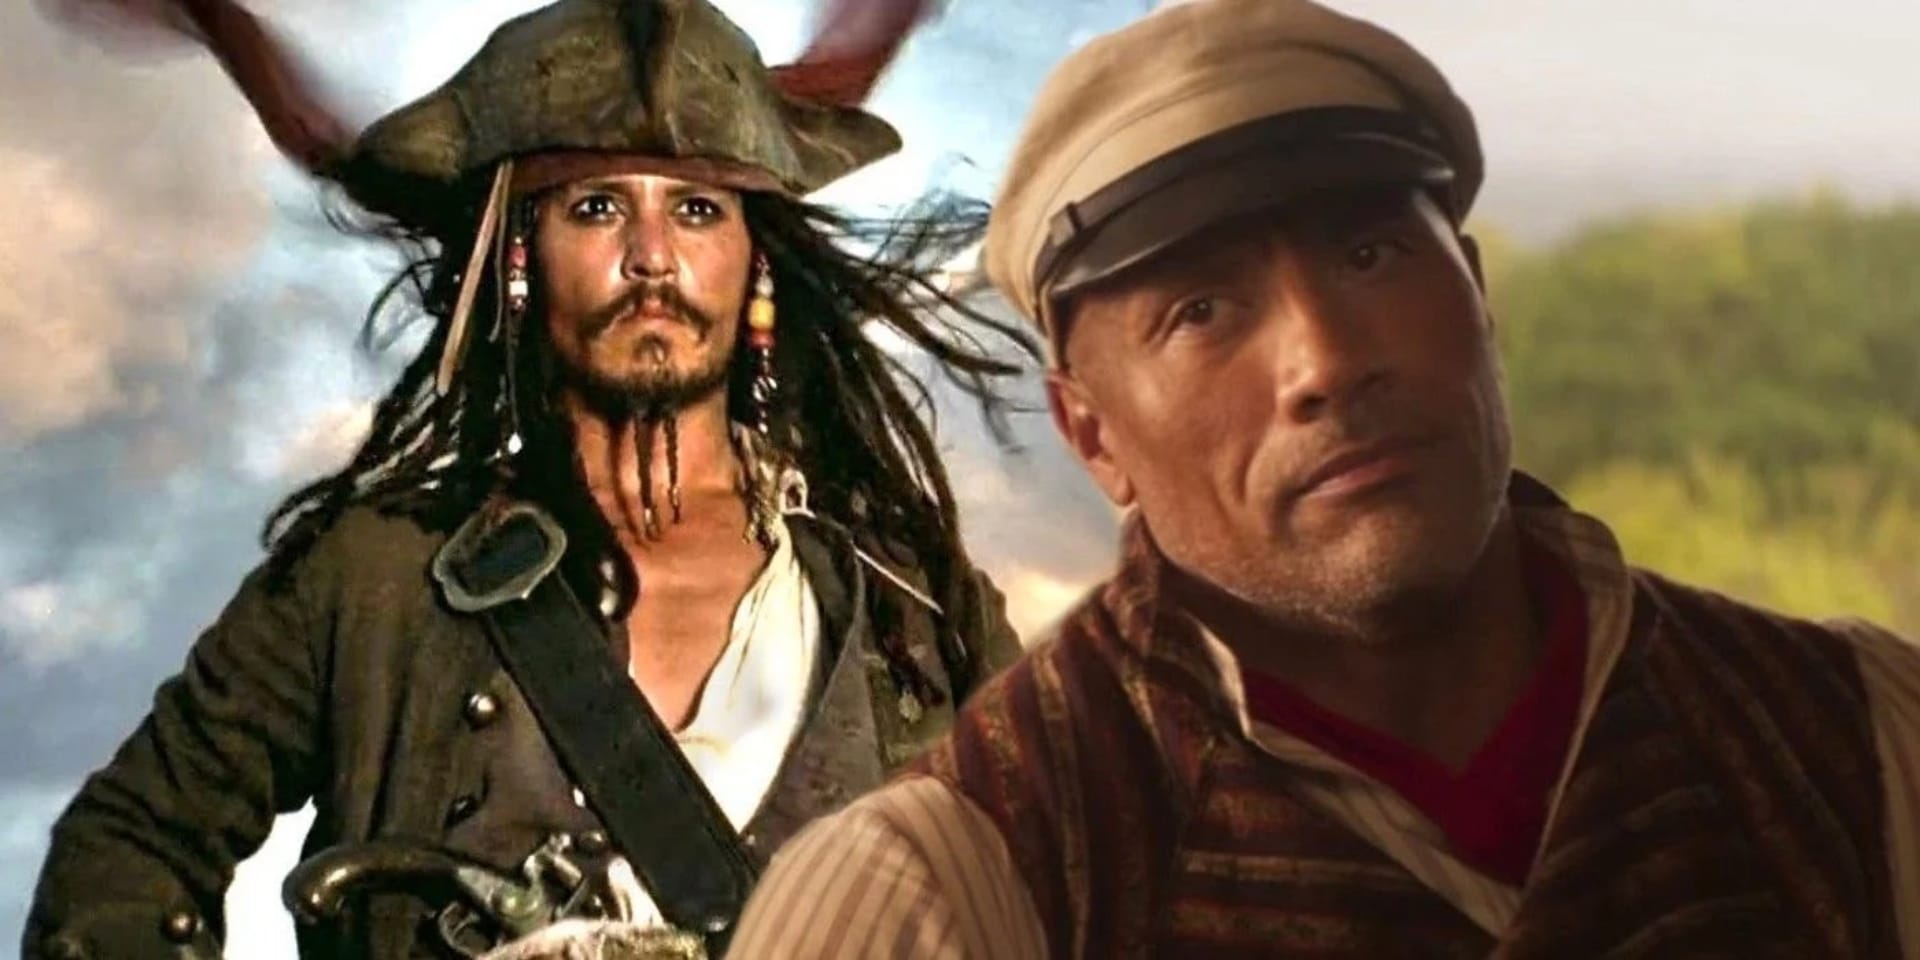 Dwayne-Johnson-Pirates-of-the-Caribbean-Johnny-Depp-eyeliner-GamersRD (1)